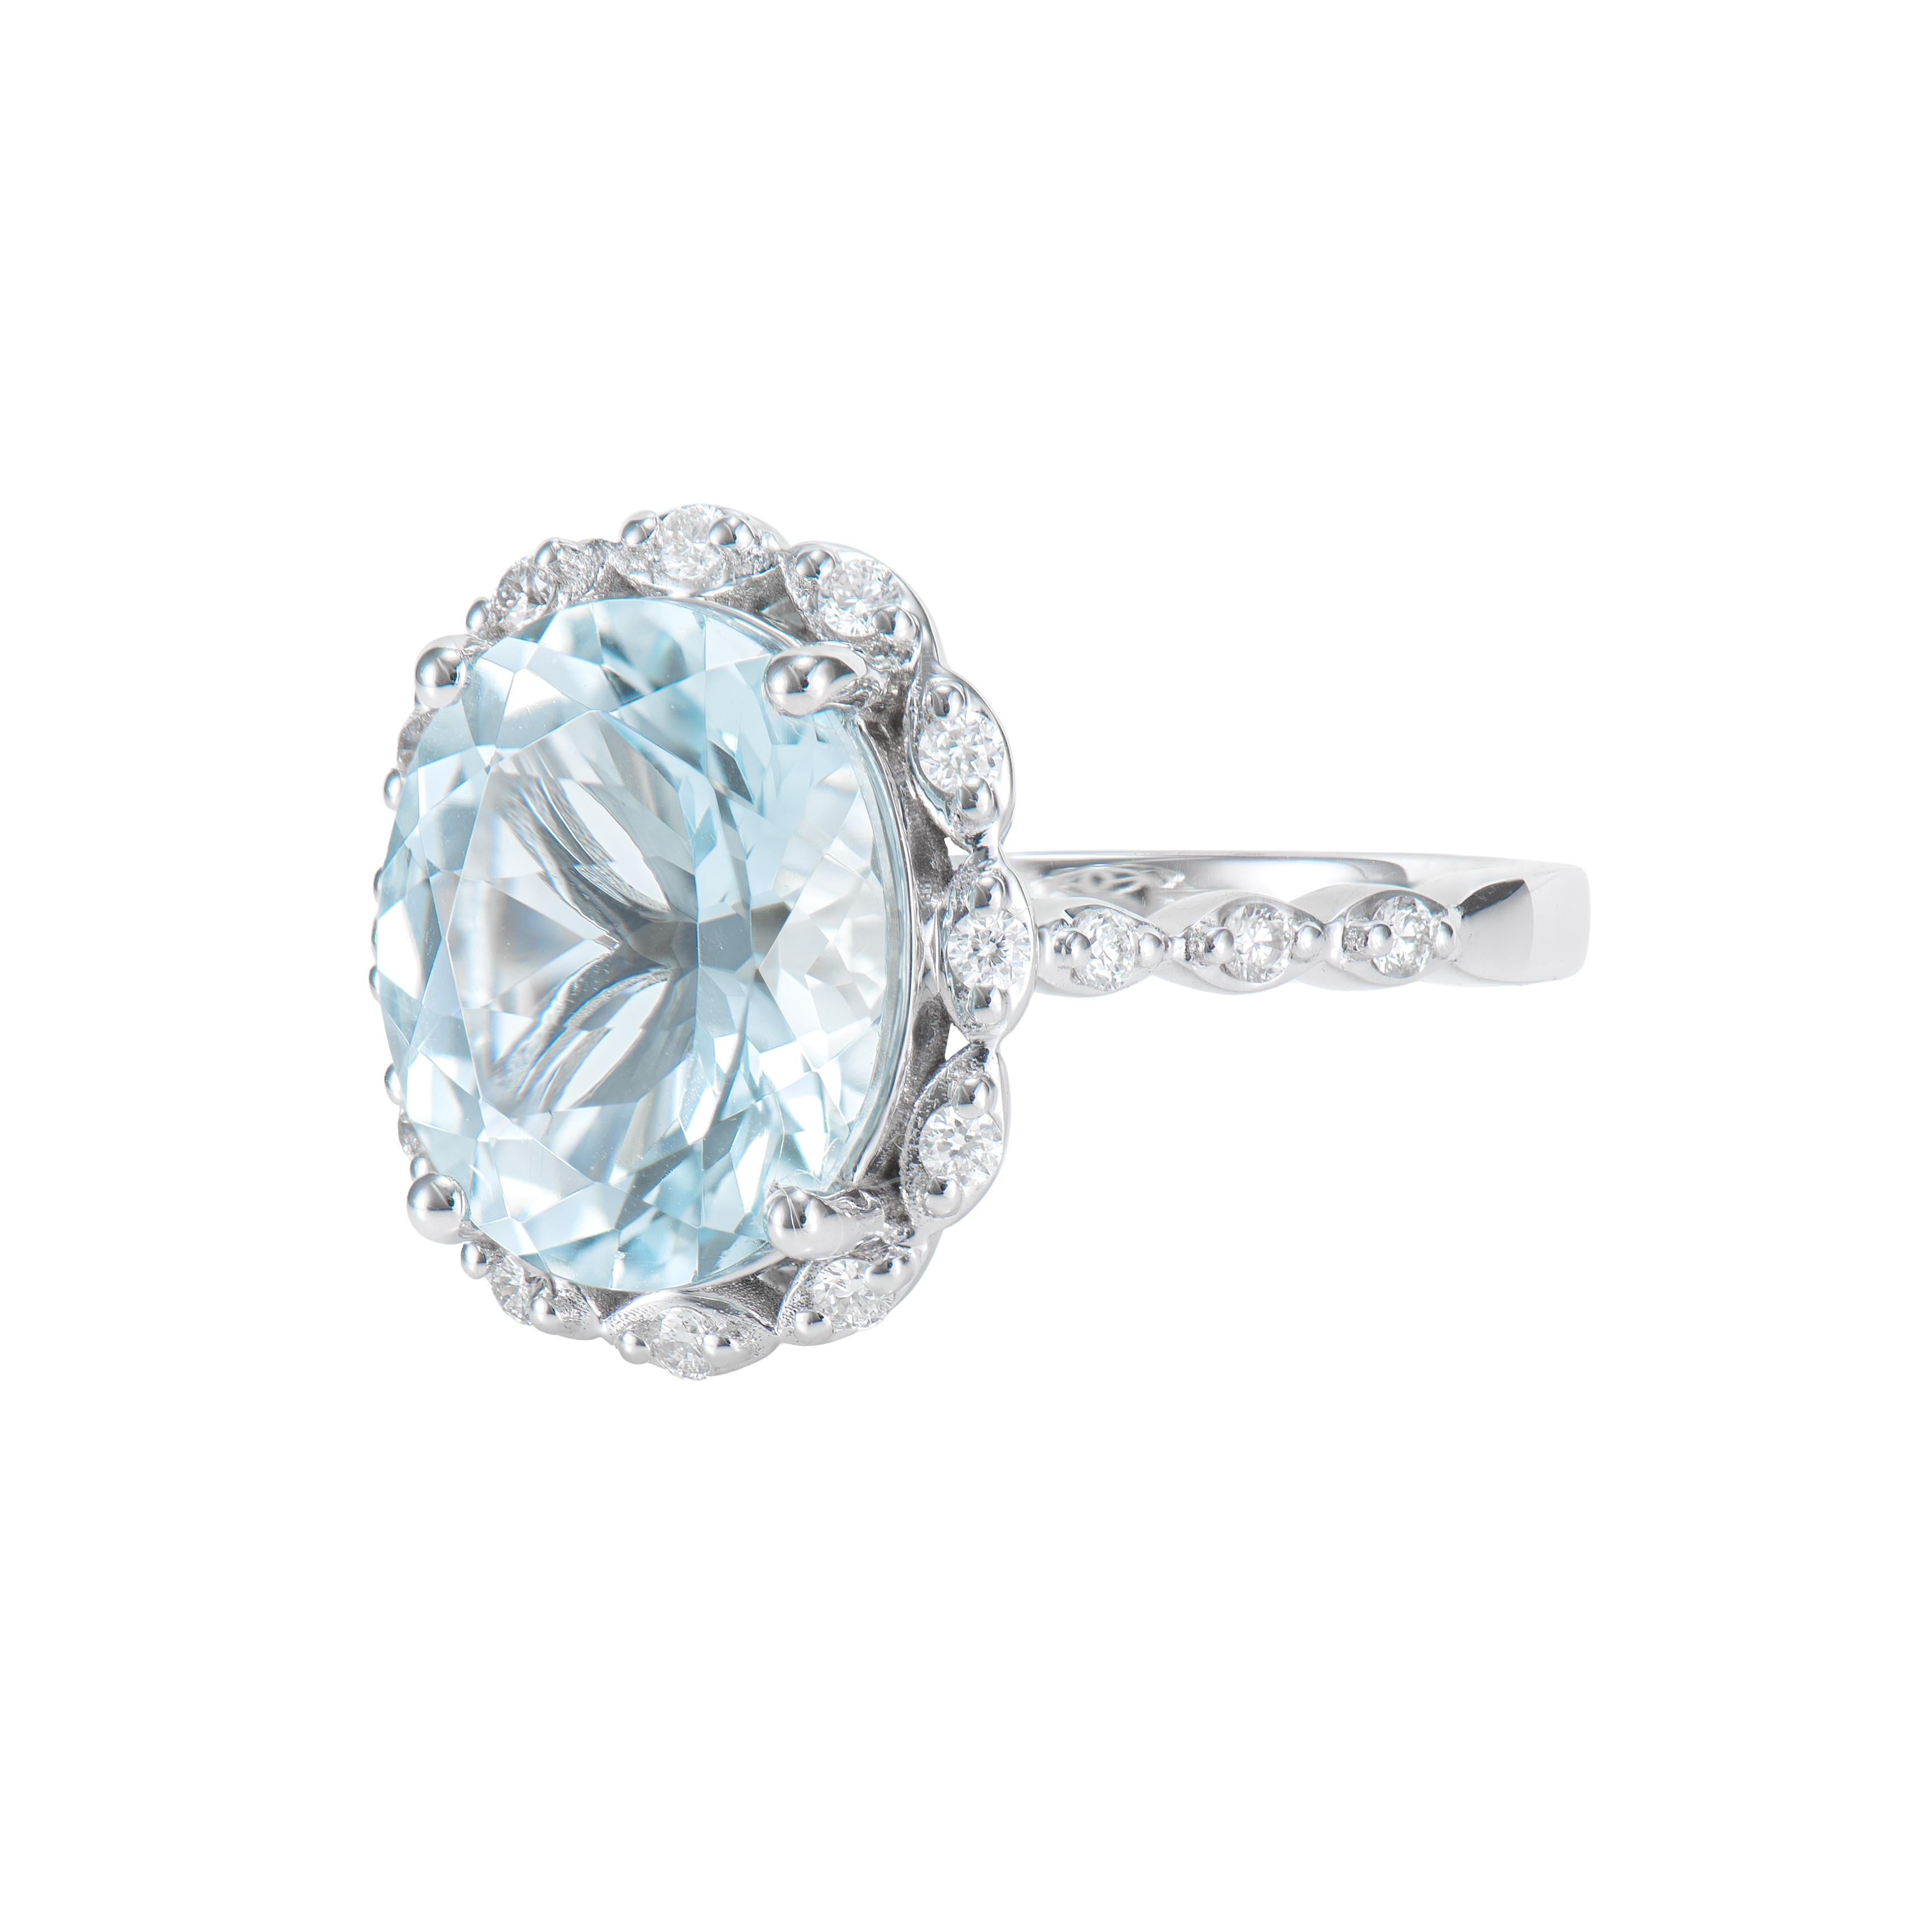 Oval Cut 4.20 Carat Aquamarine Elegant Ring in 18 Karat White Gold with White Diamond. For Sale